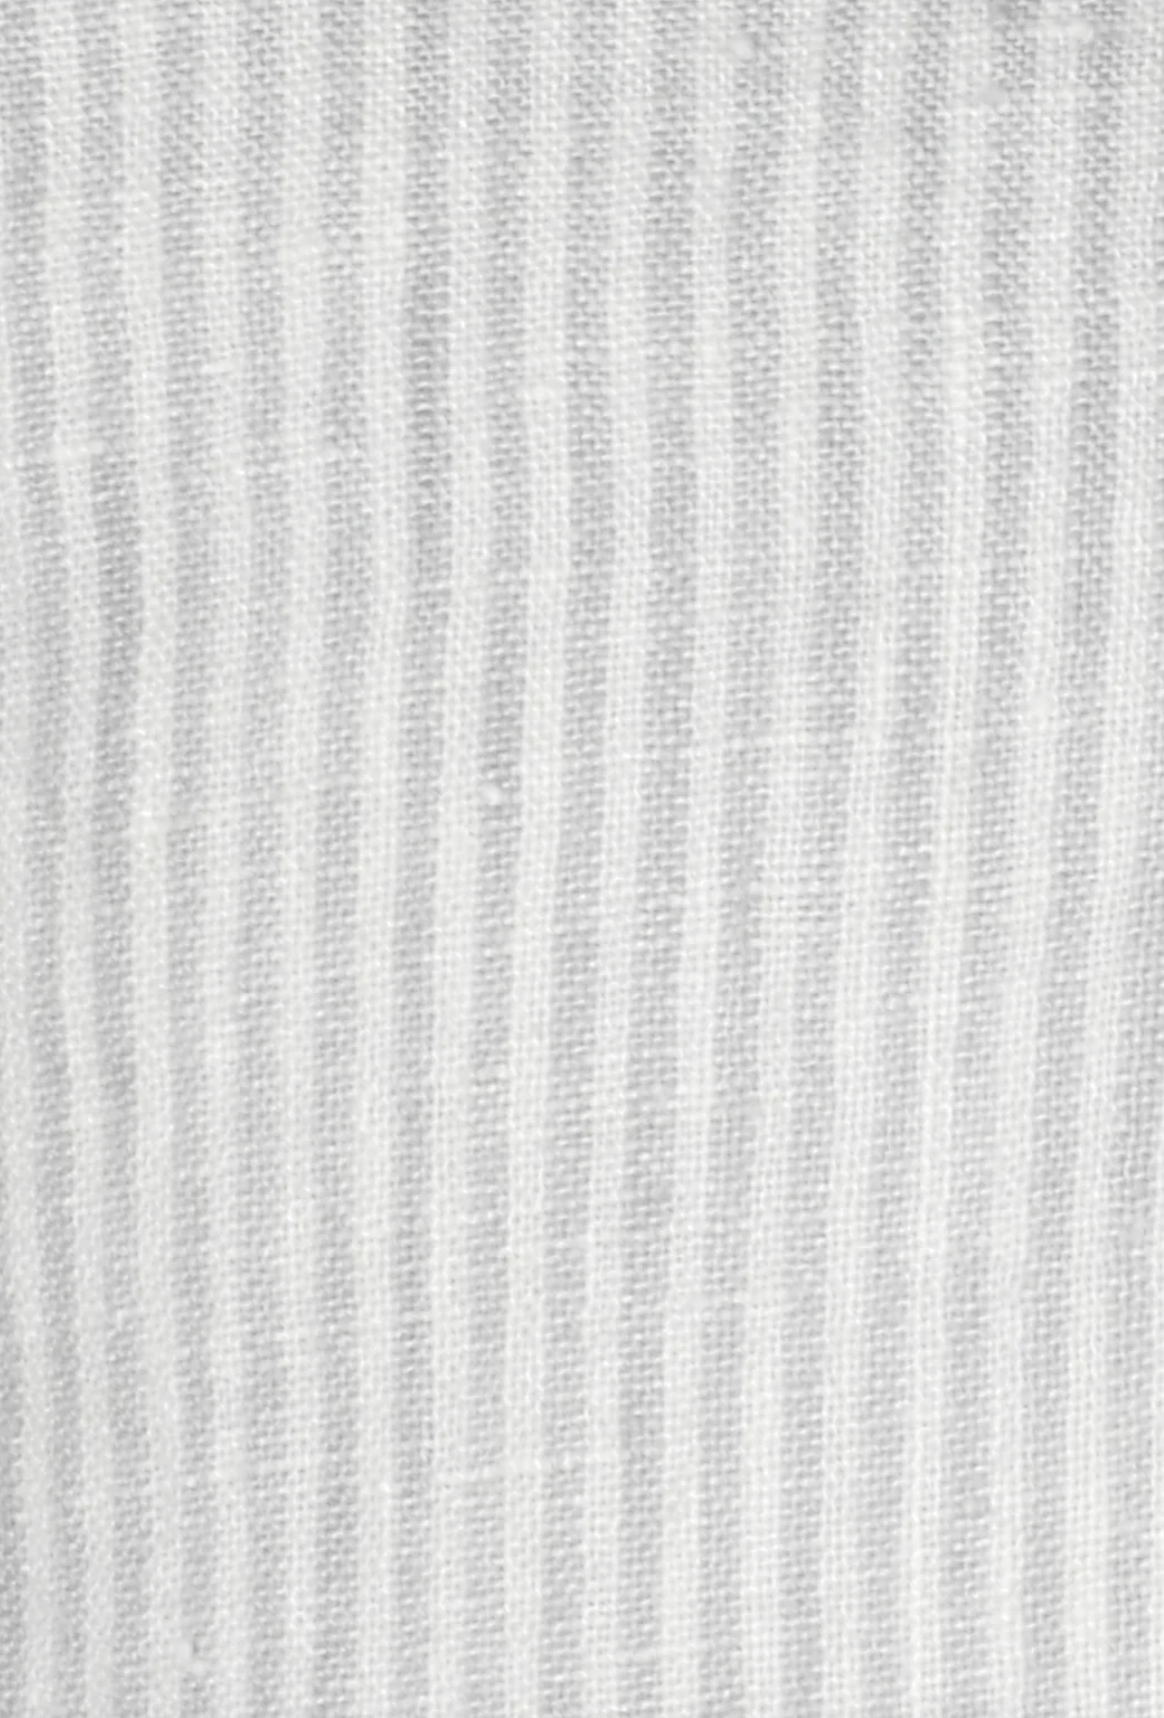 Light Grey & White Striped Linen Pillows